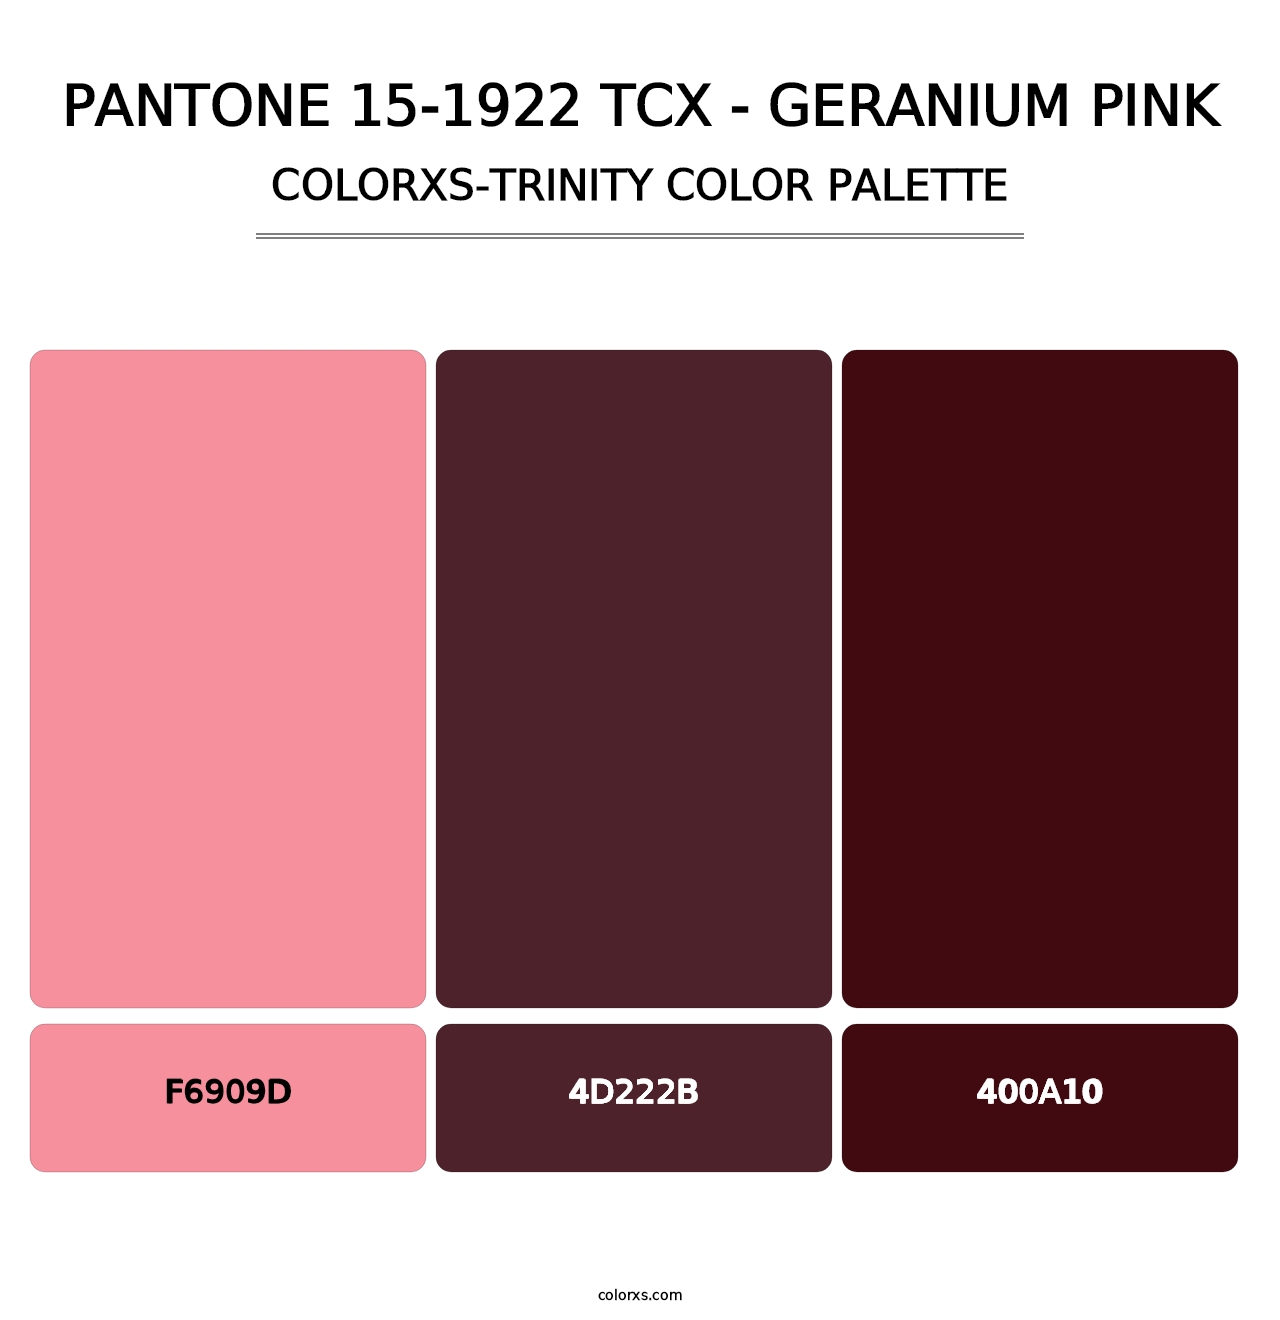 PANTONE 15-1922 TCX - Geranium Pink - Colorxs Trinity Palette